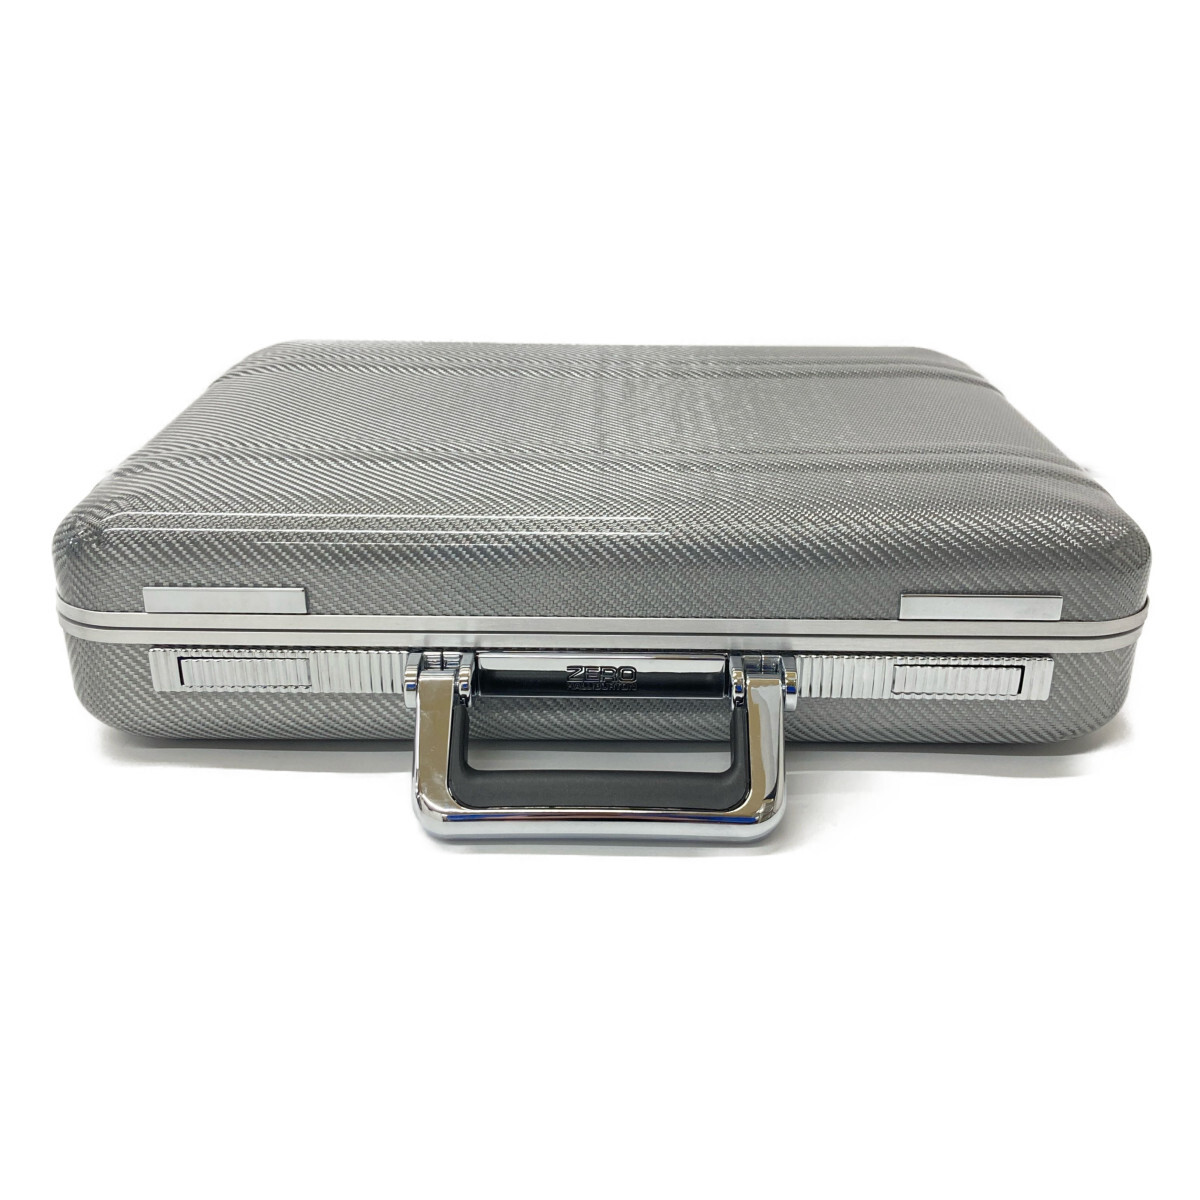 [1 jpy / as good as new ] ZERO HALLIBURTON Zero Halliburton silver car bon attache case trunk 